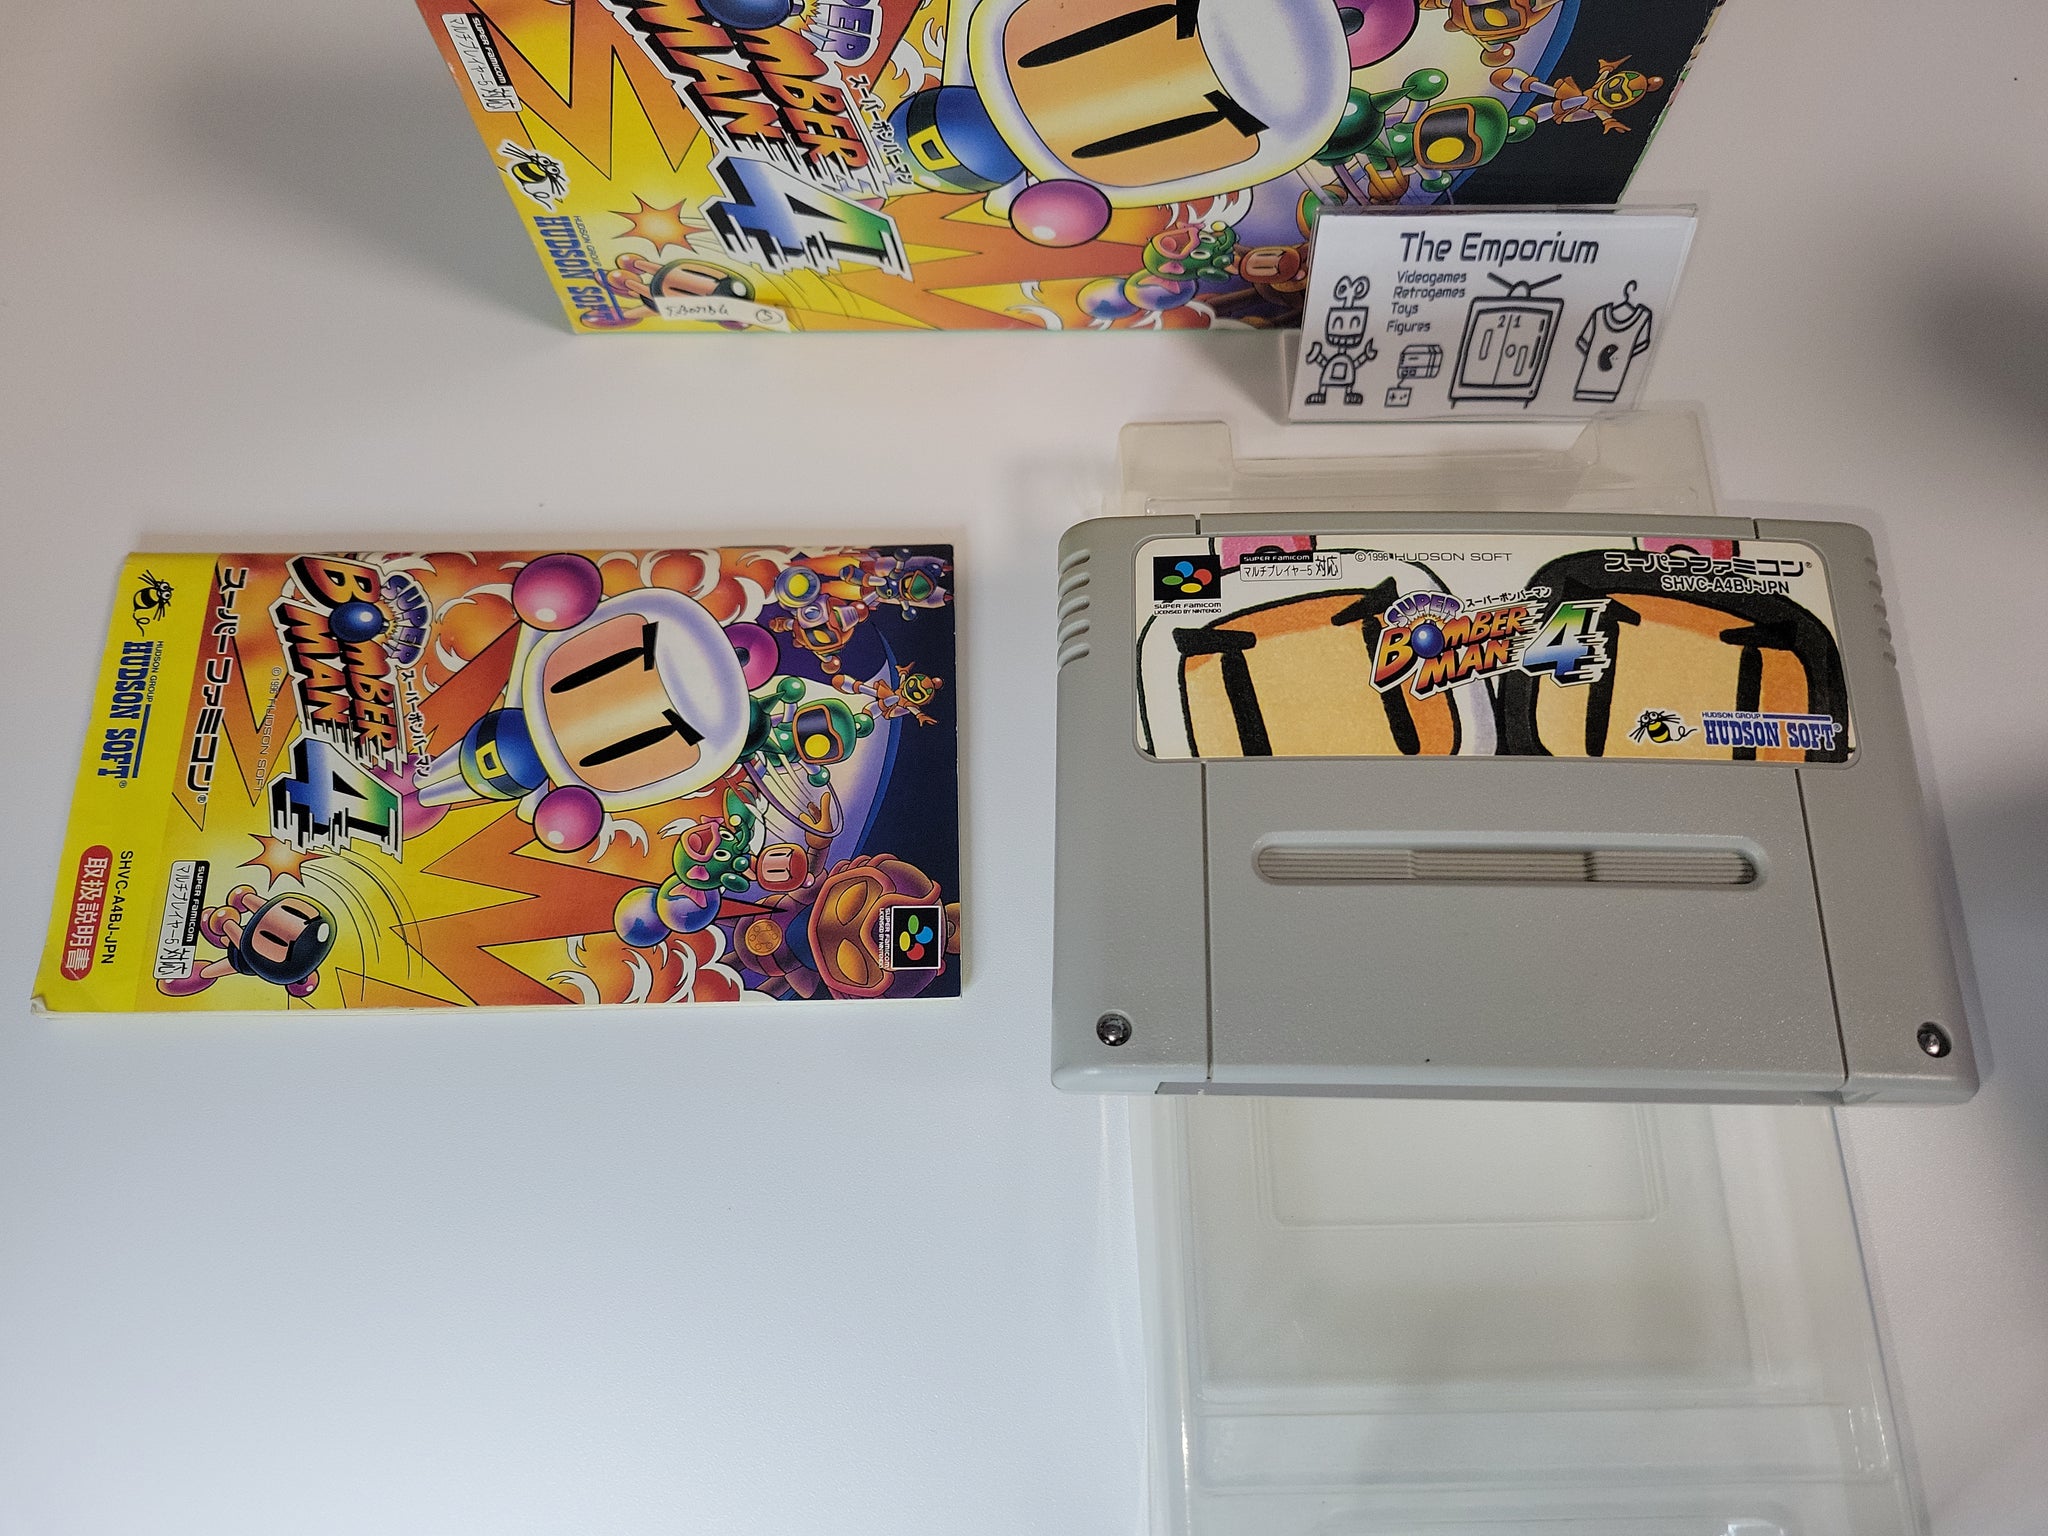 Super Bomberman 4 SFC (B) – Retro Games Japan